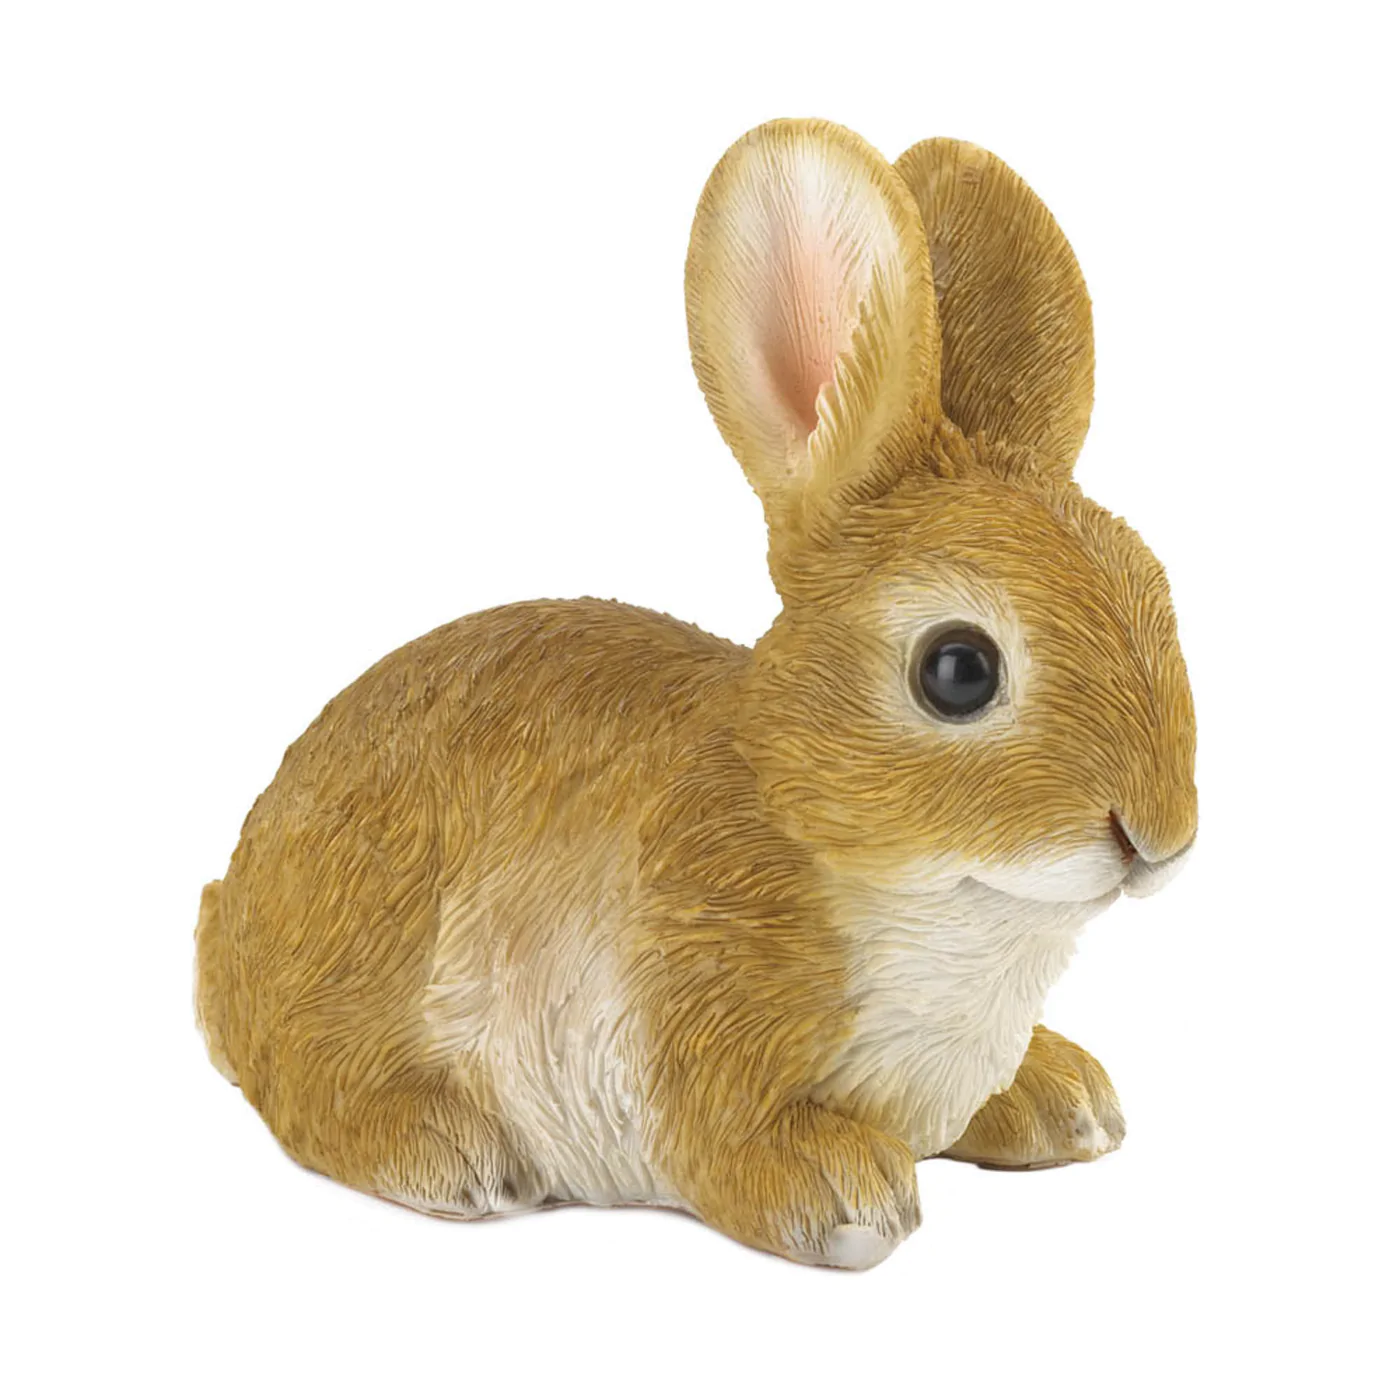 Primary image for Vivid Rabbit Figurine